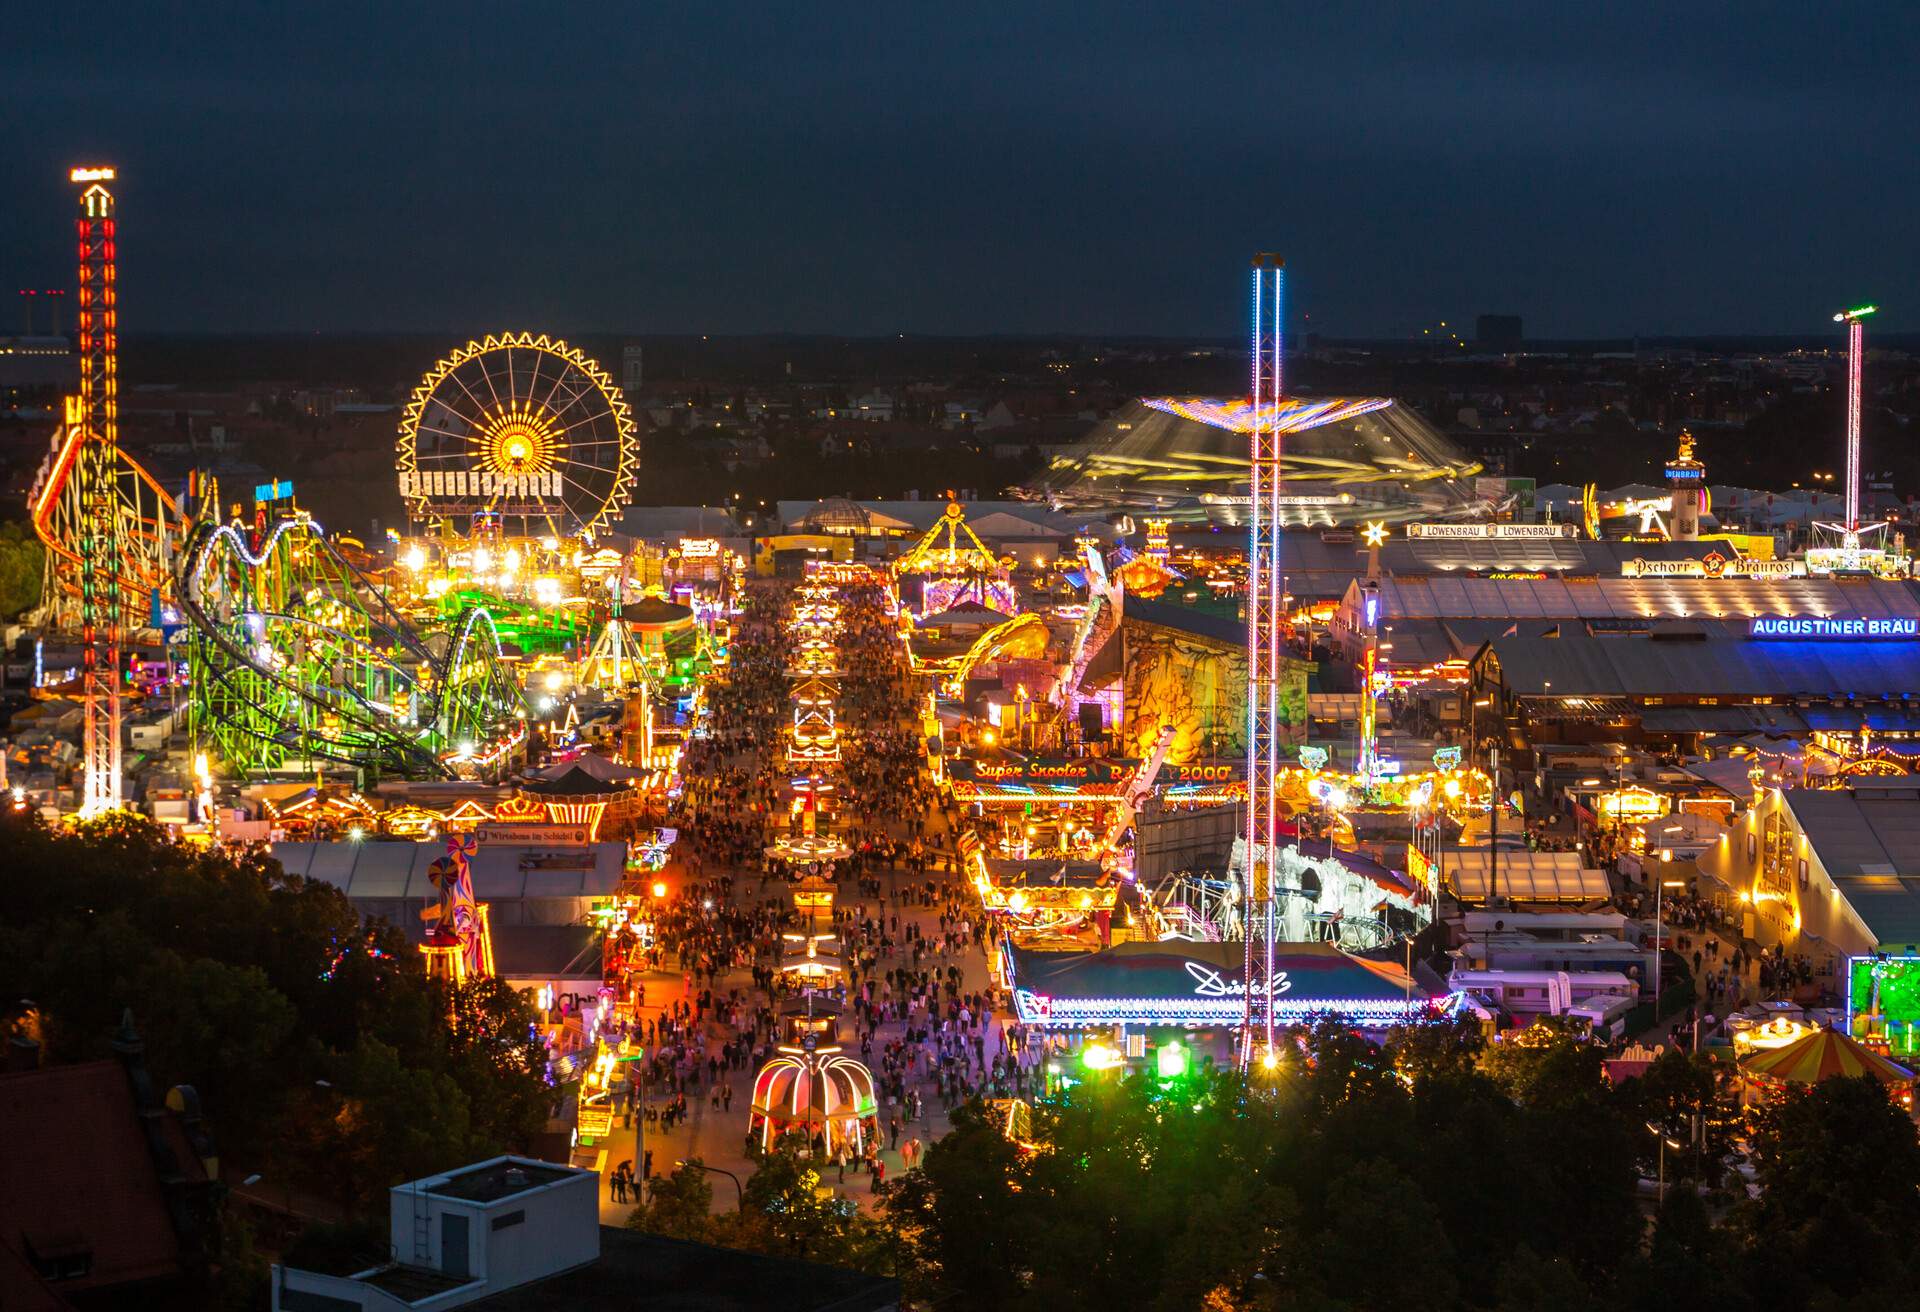 A crowded, brightly illuminated amusement park under the dark night sky.